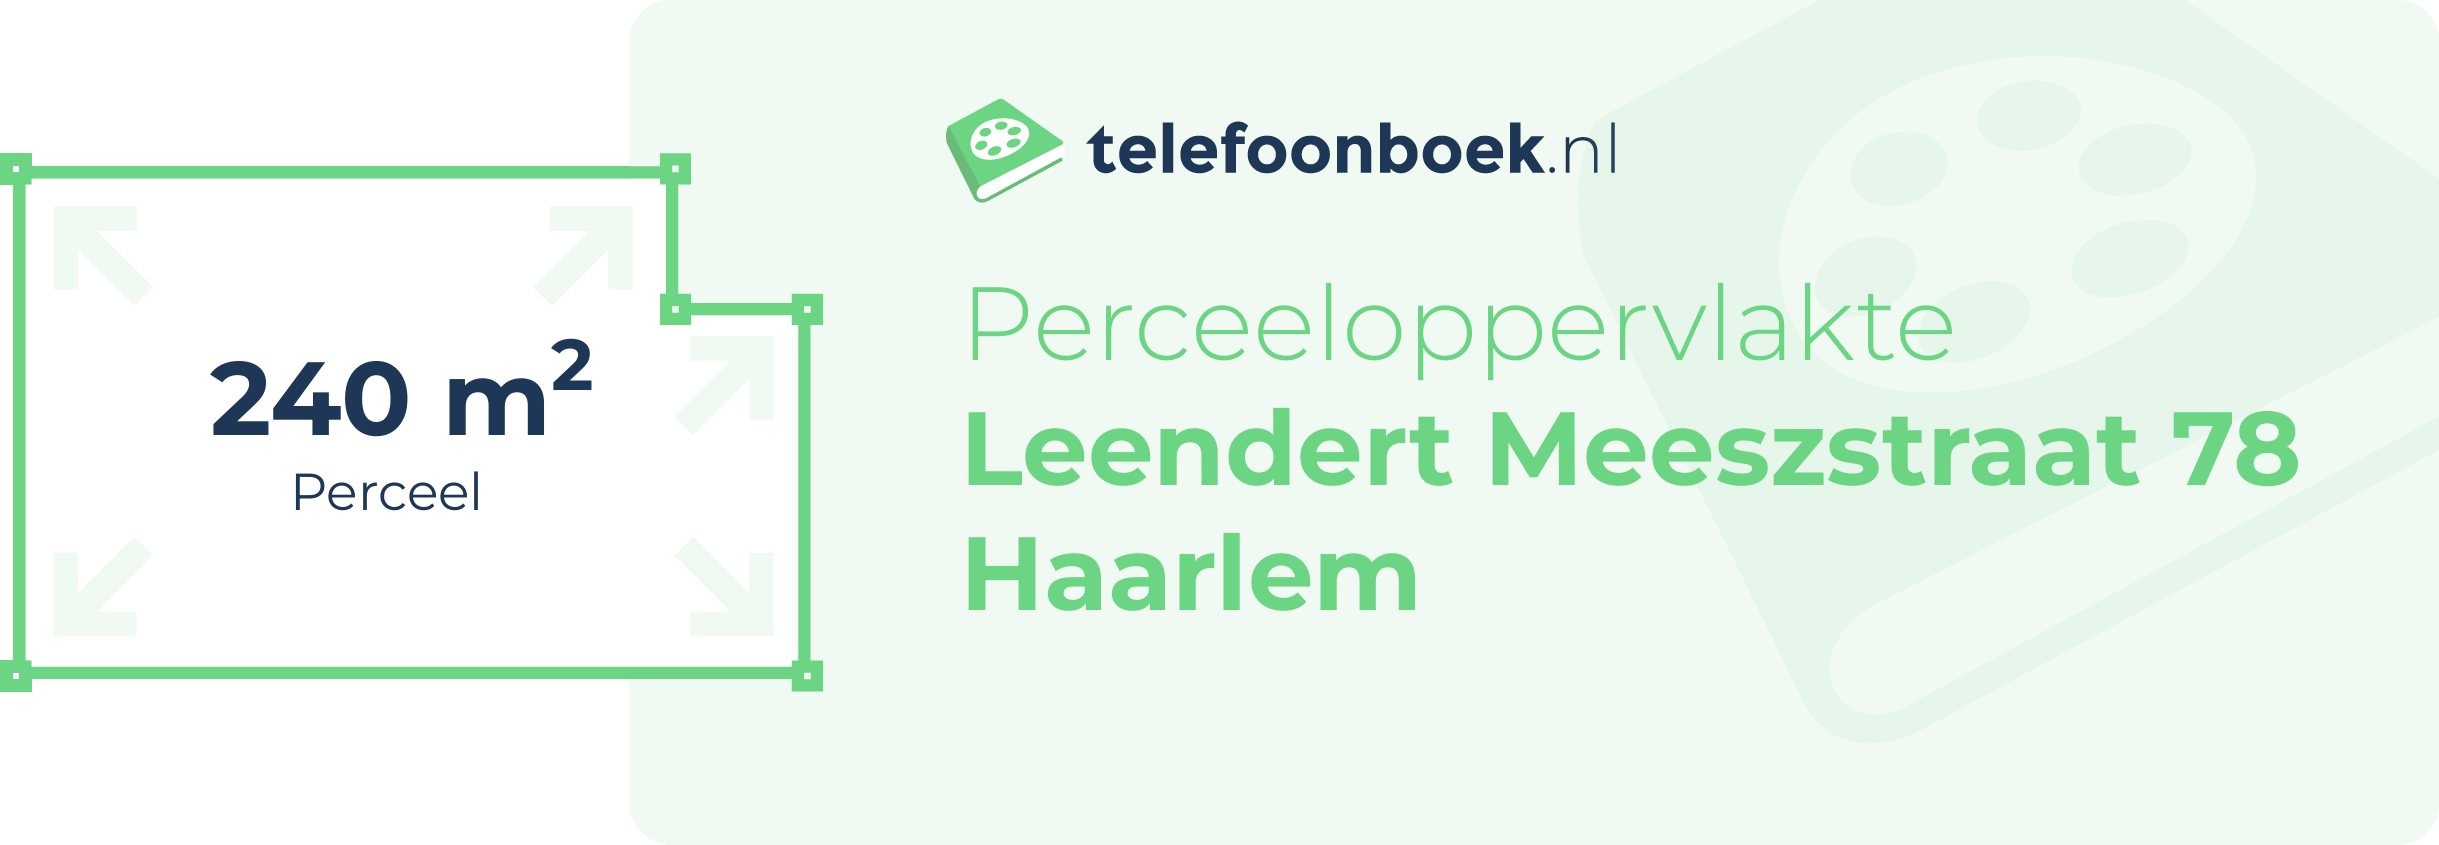 Perceeloppervlakte Leendert Meeszstraat 78 Haarlem